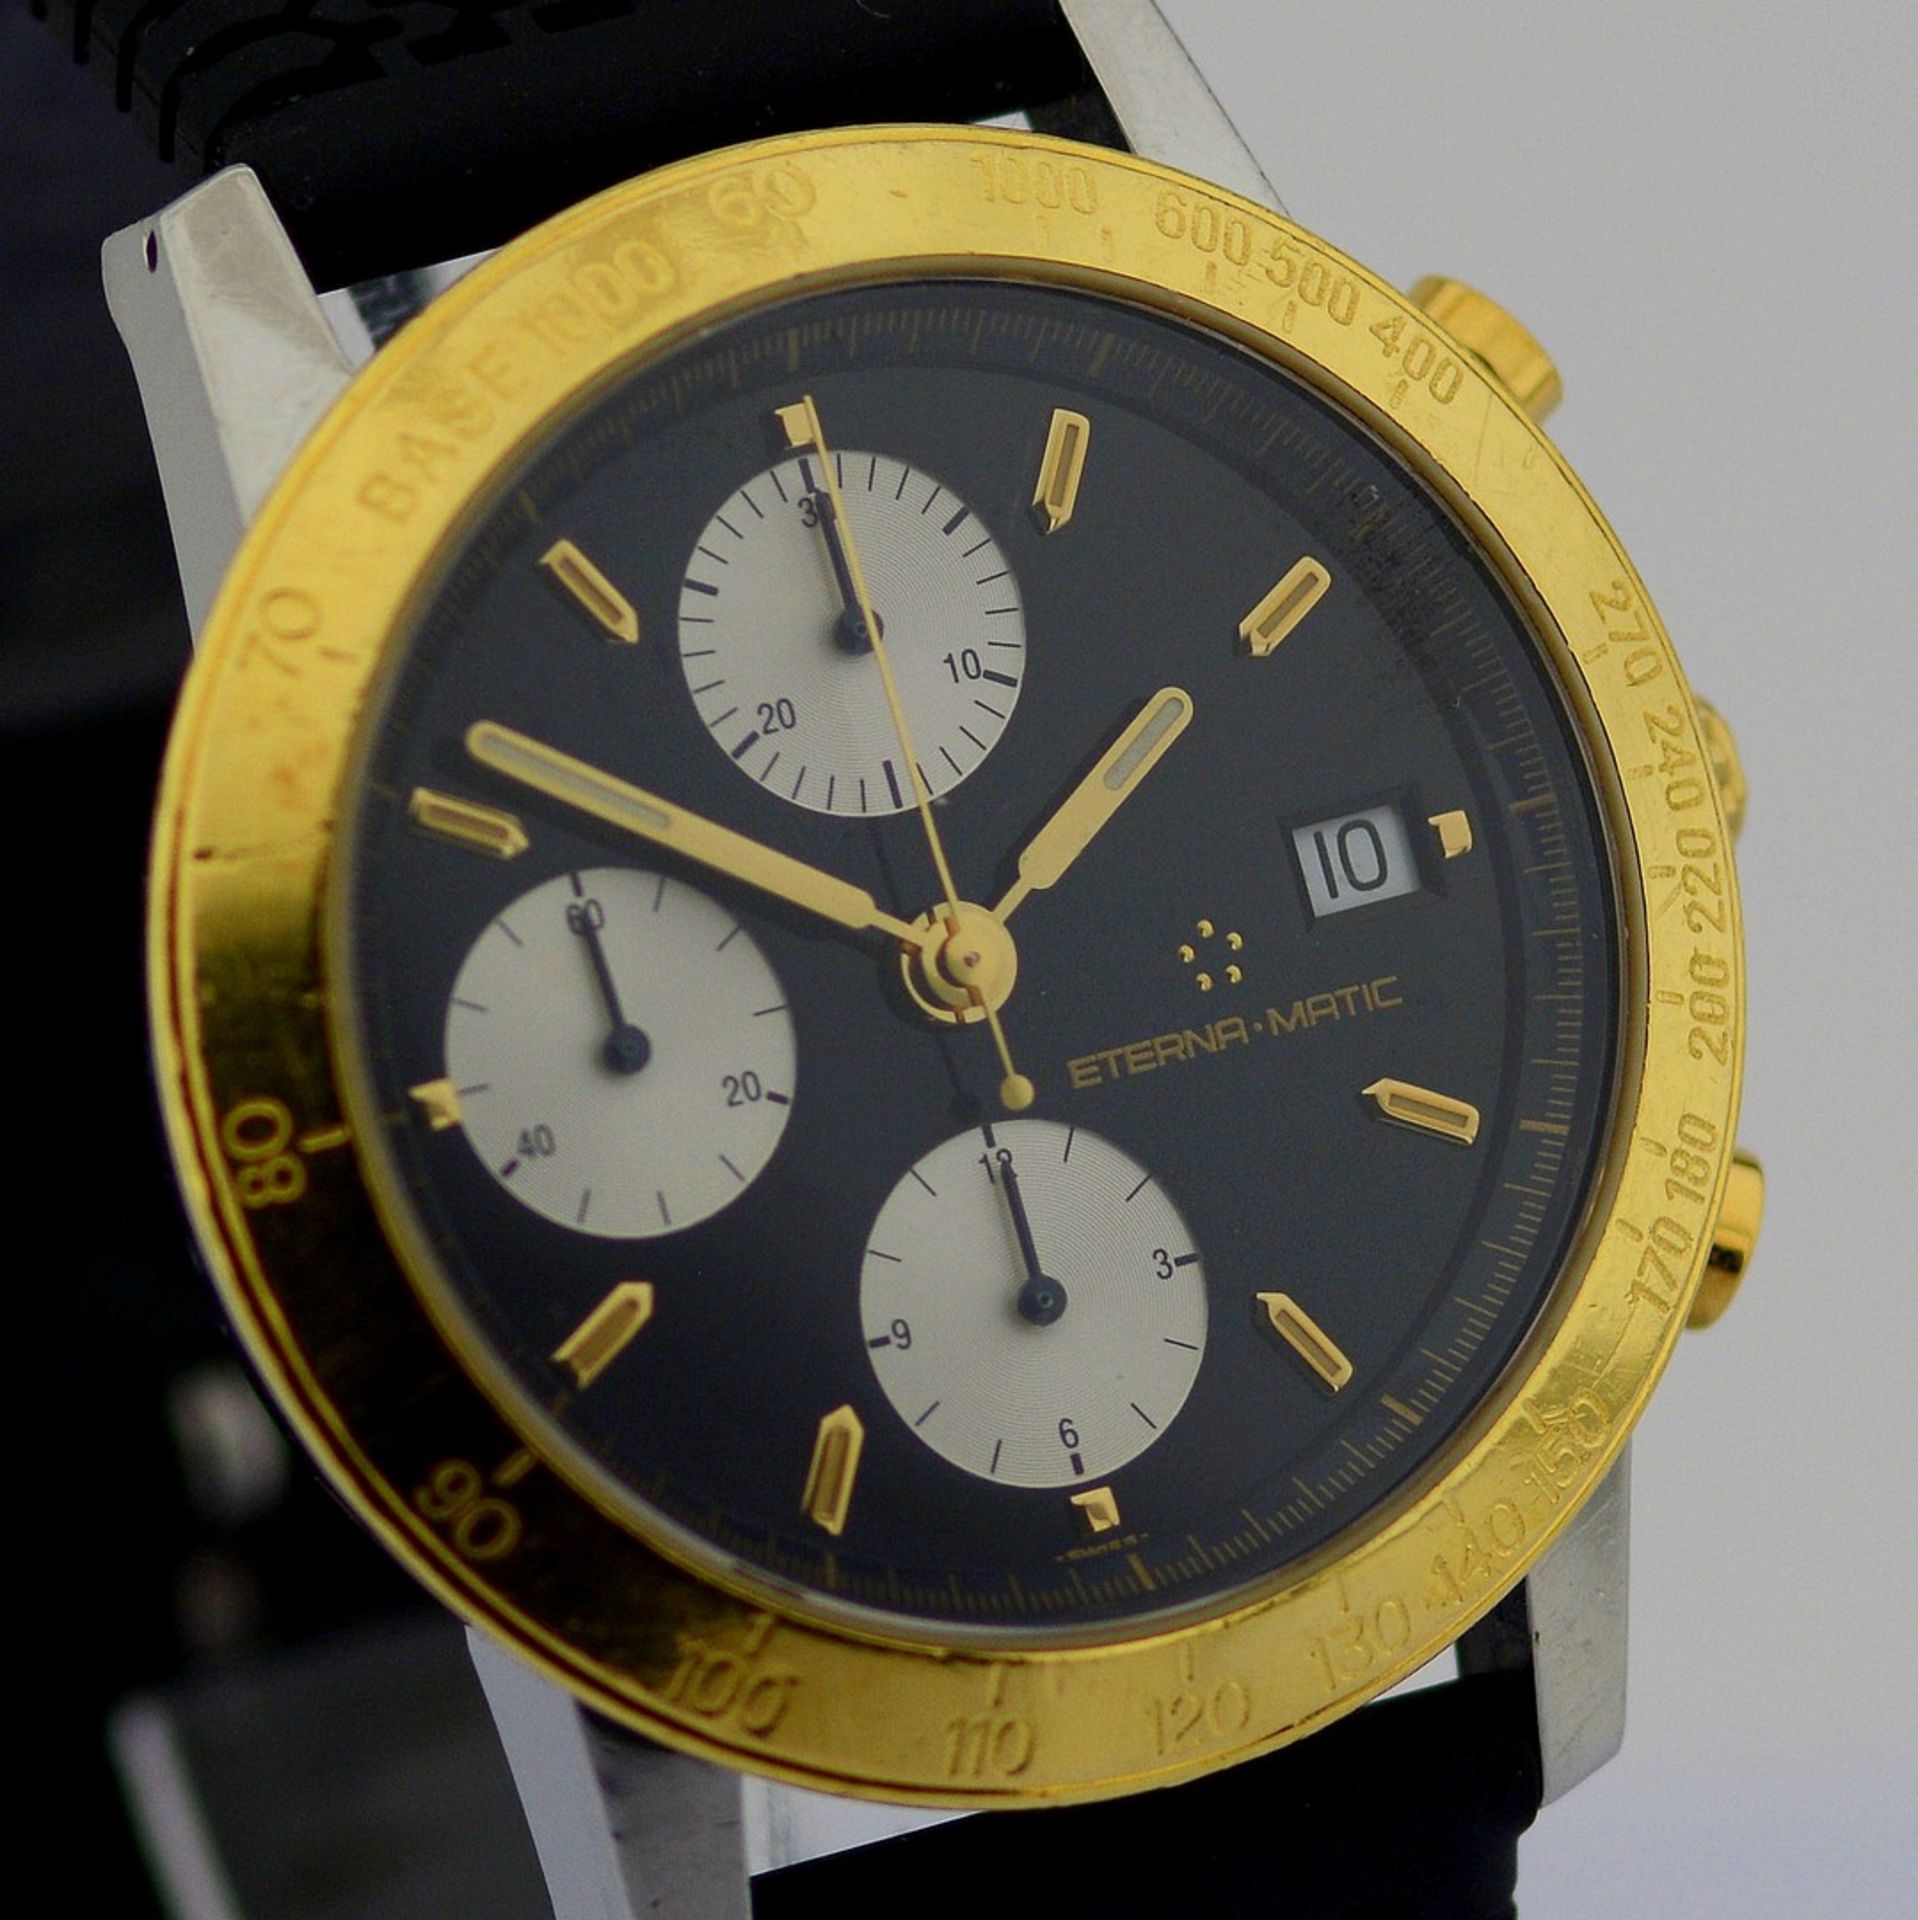 Eterna-Matic / Kontiki Chronograph - Gentlmen's Gold/Steel Wrist Watch - Image 5 of 10